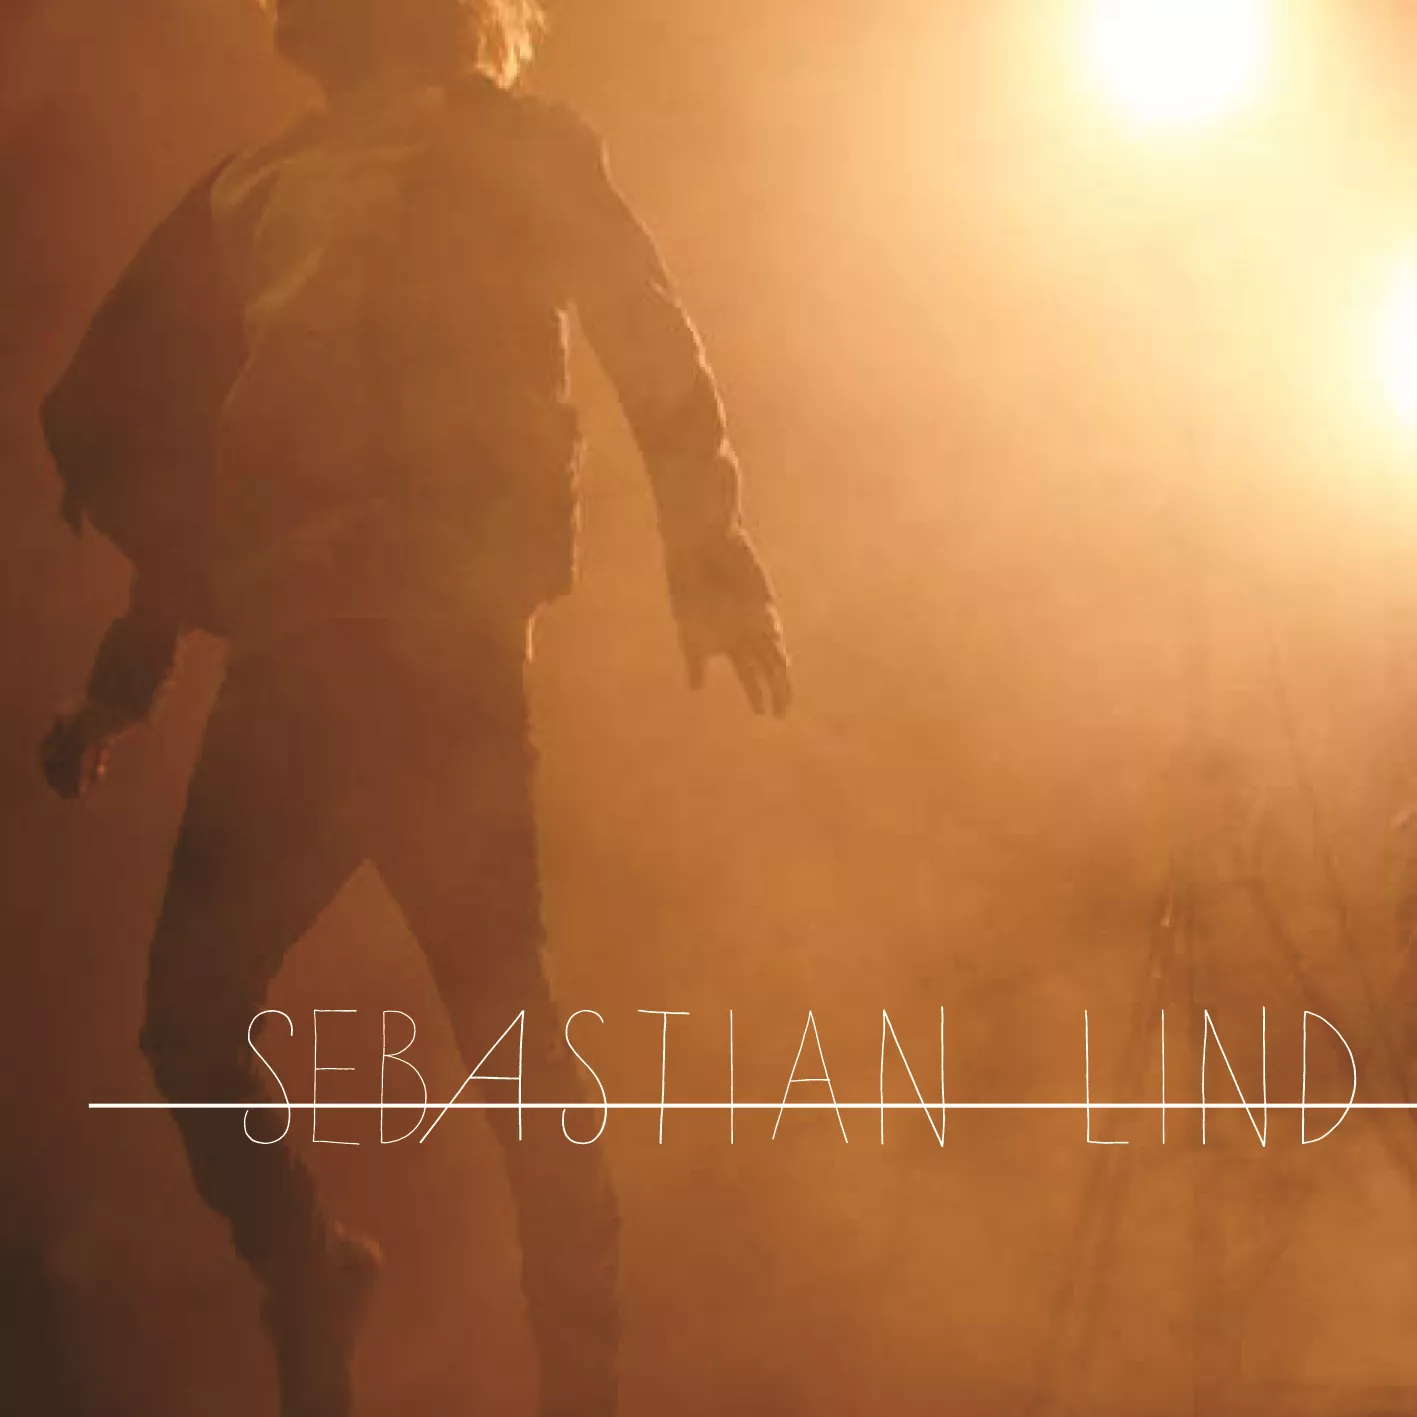 Sebastian Lind - Sebastian Lind